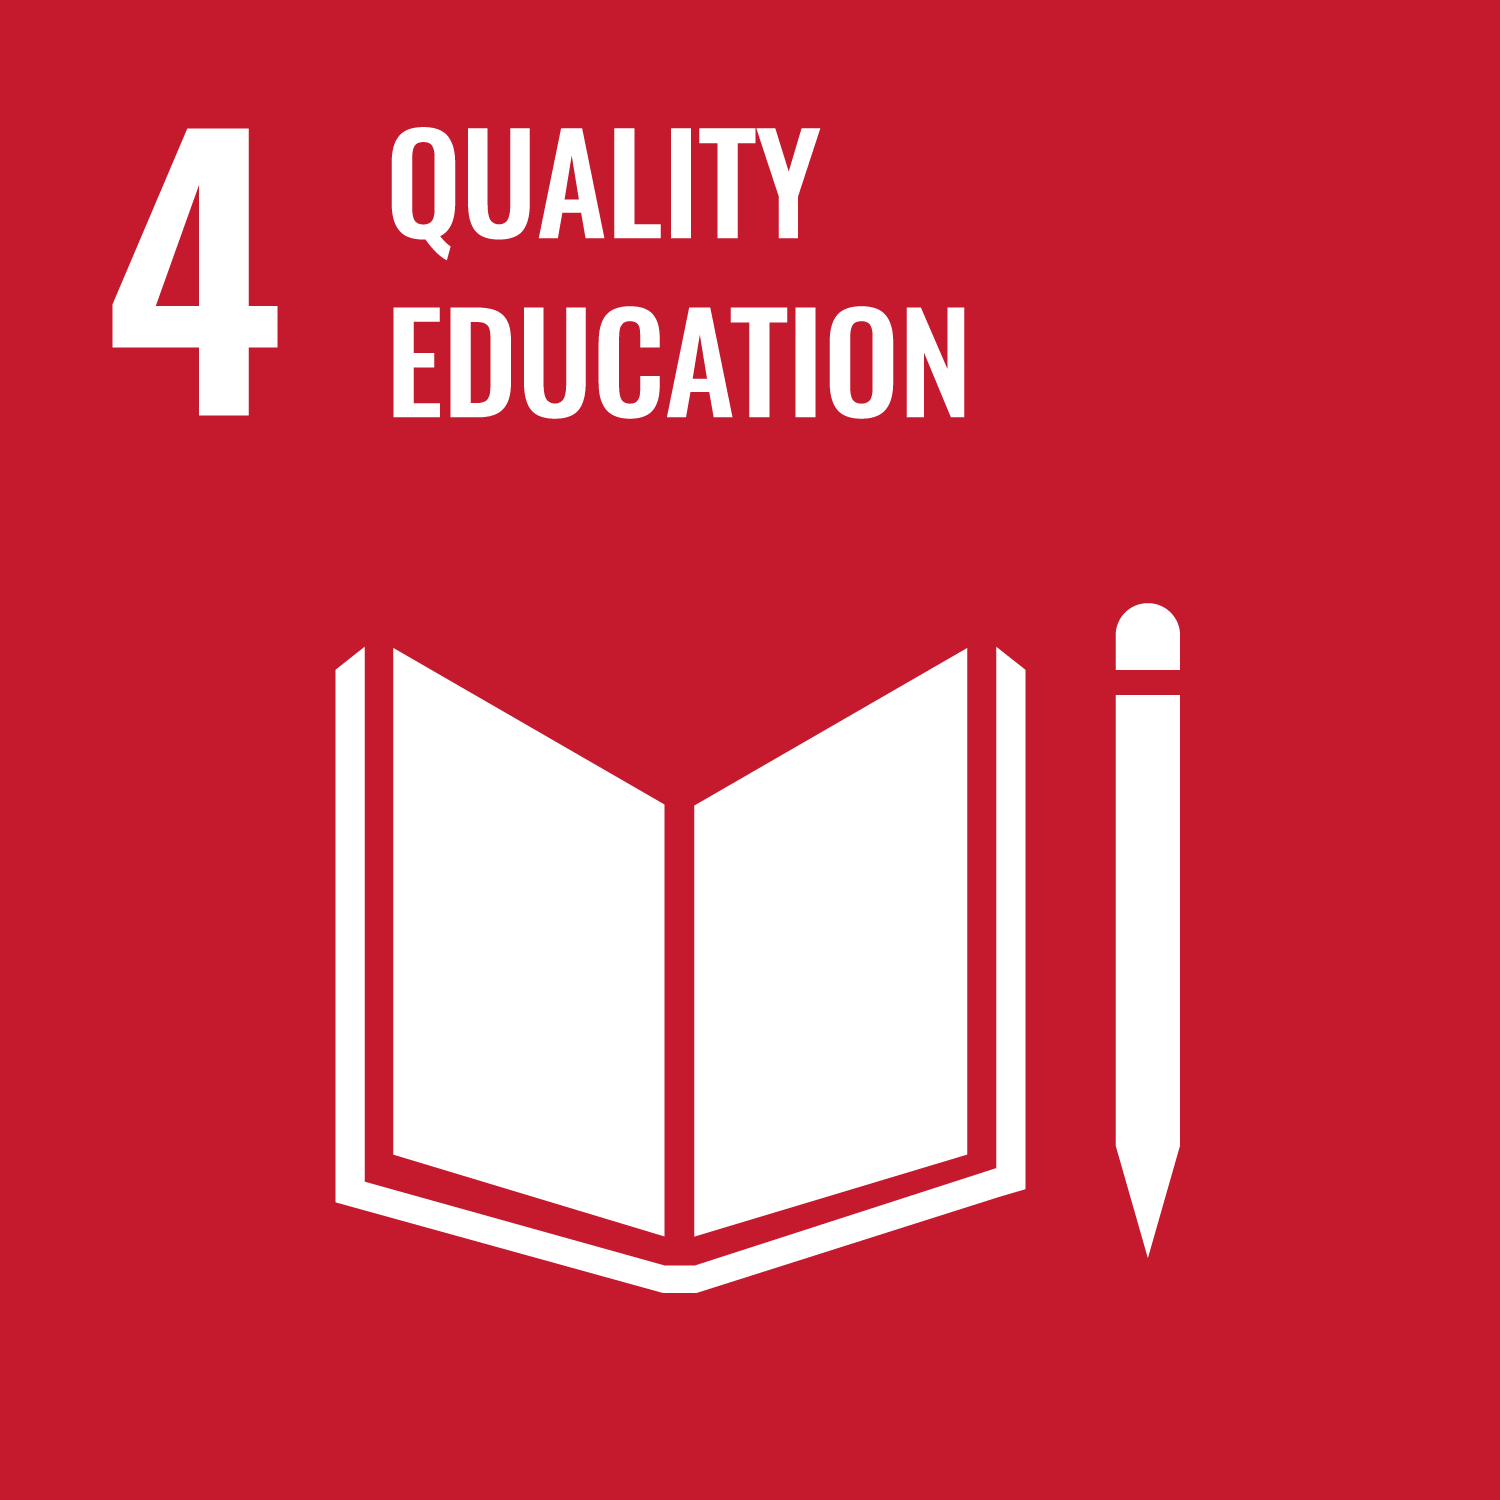 Sustainable Development Goal 4 – Quality Education